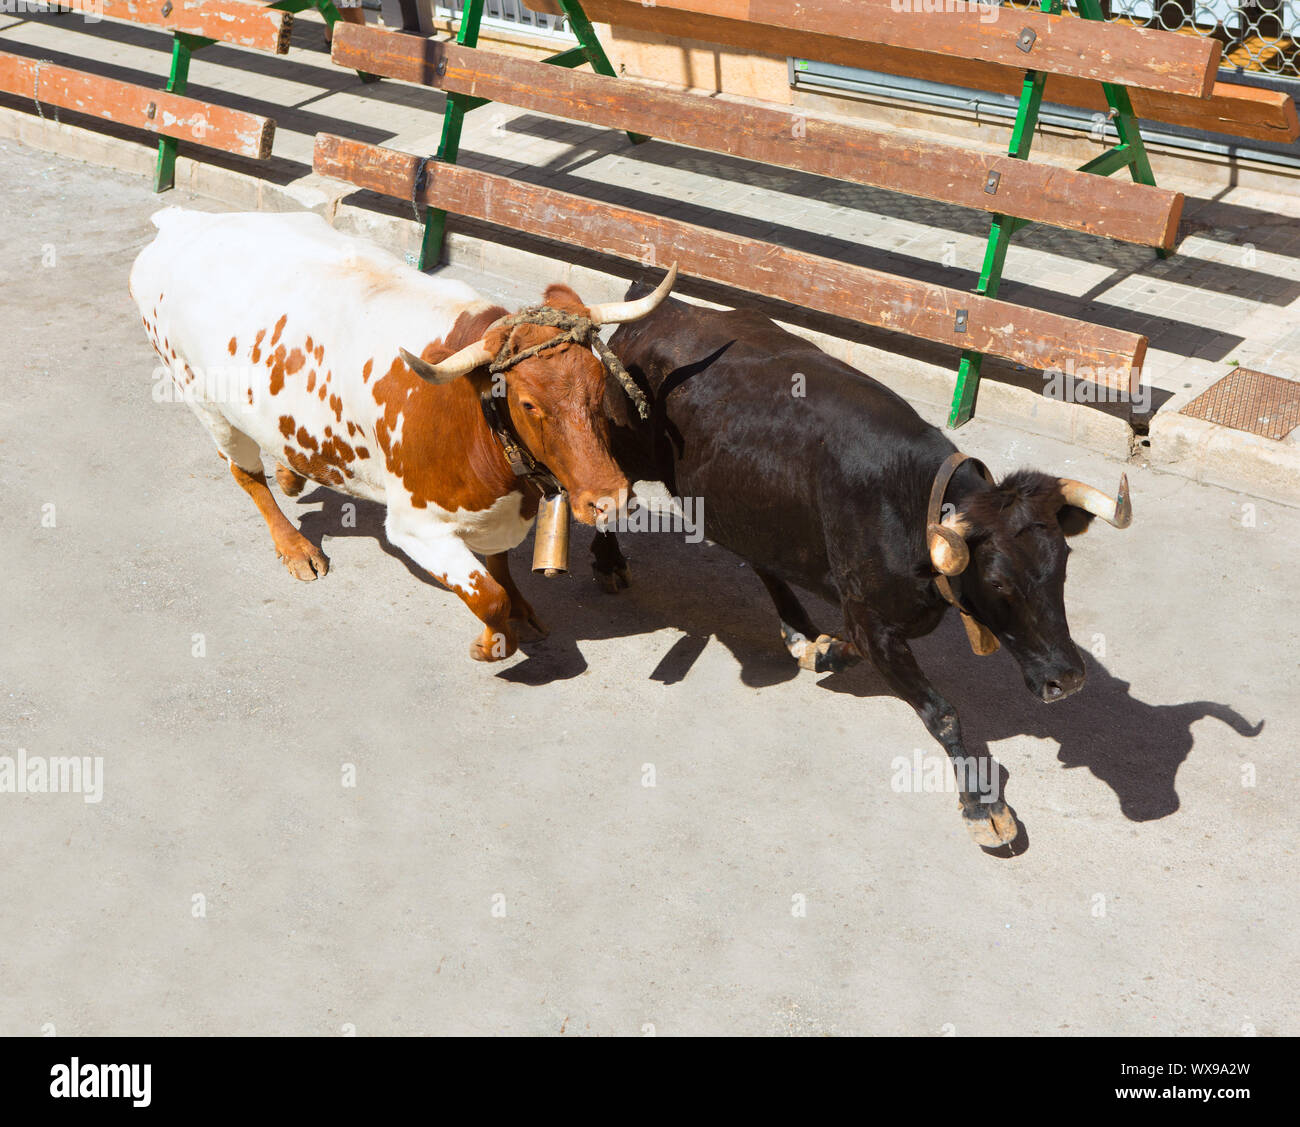 Bull at street traditional fest in Spain running of the bulls Stock Photo